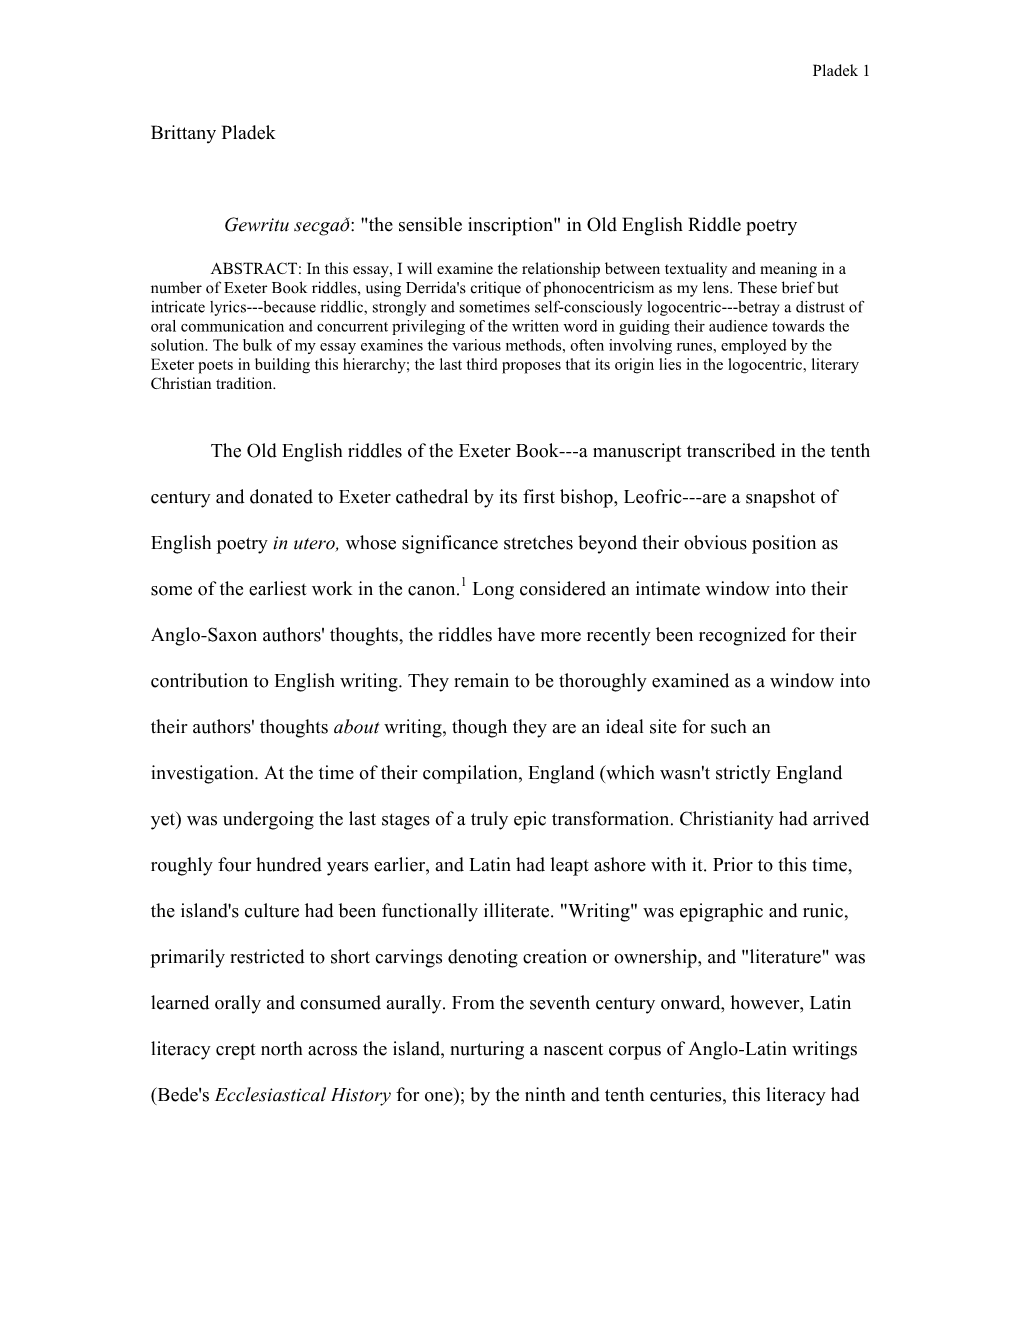 Brittany Pladek Gewritu Secgaš : "The Sensible Inscription" in Old English